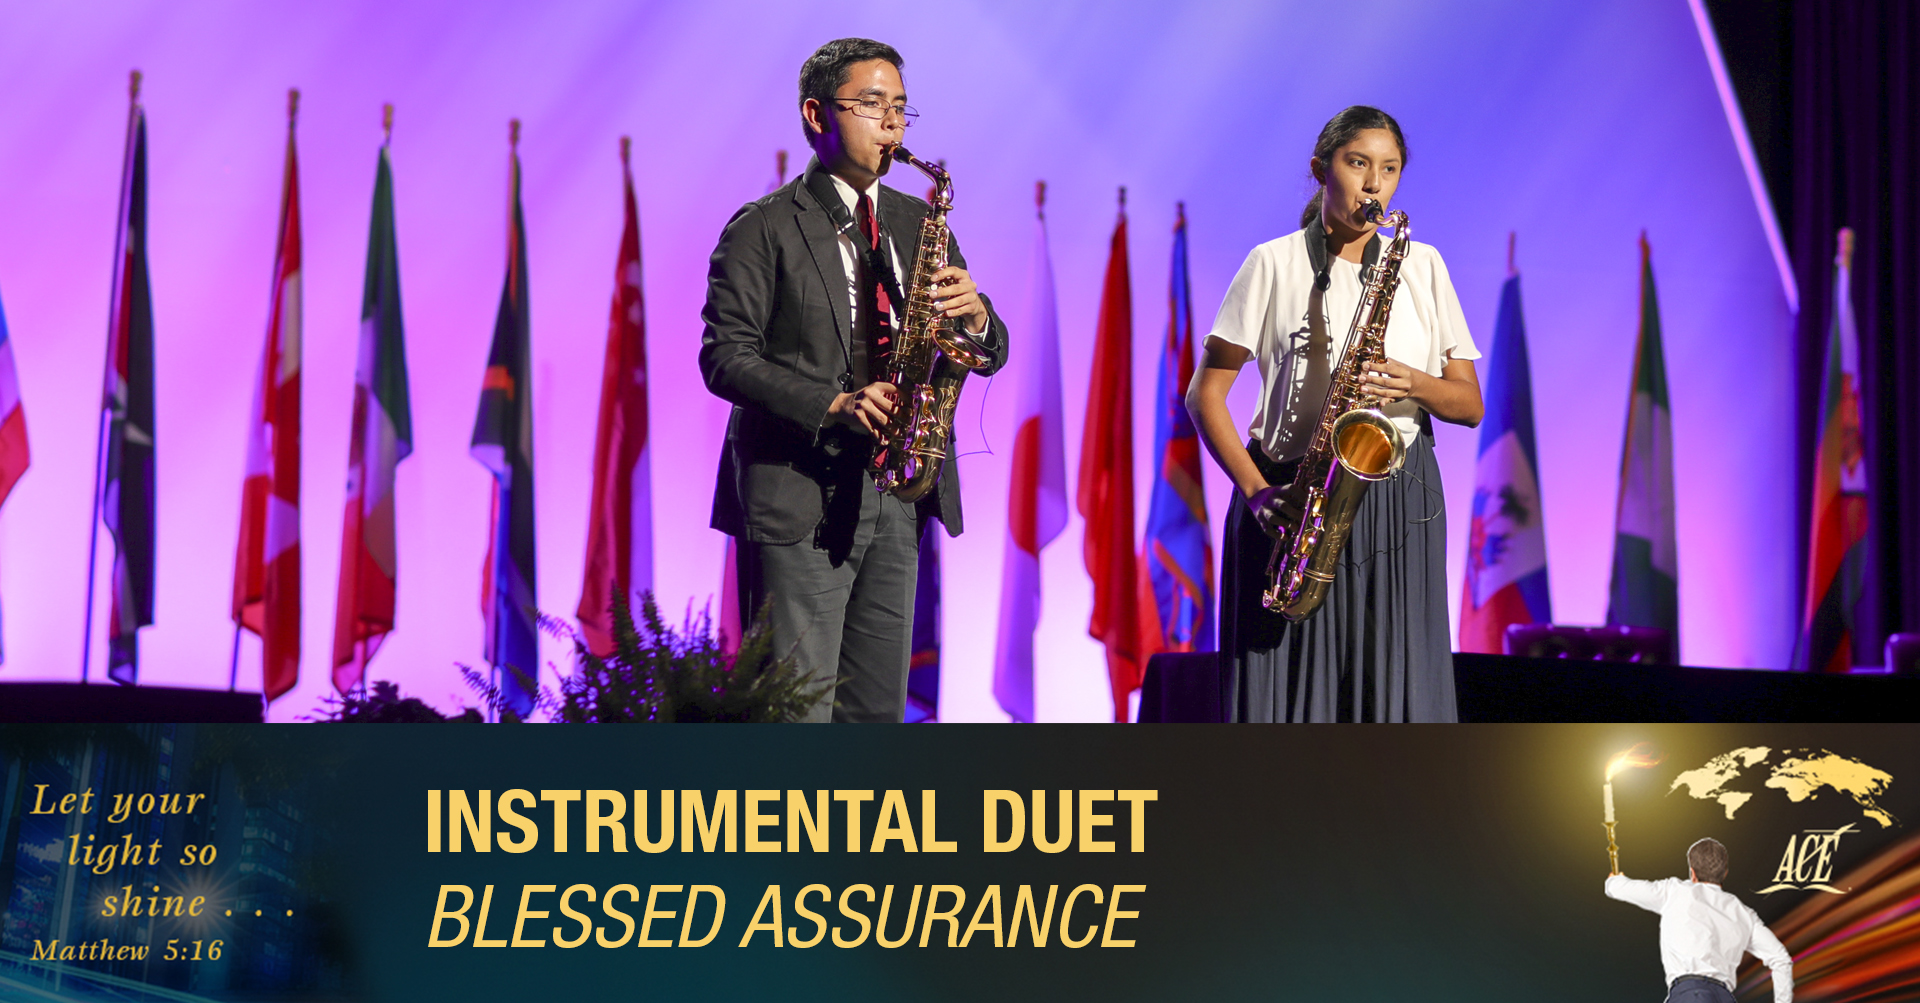 Instrumental Duet, "Blessed Assurance" - ISC 2019